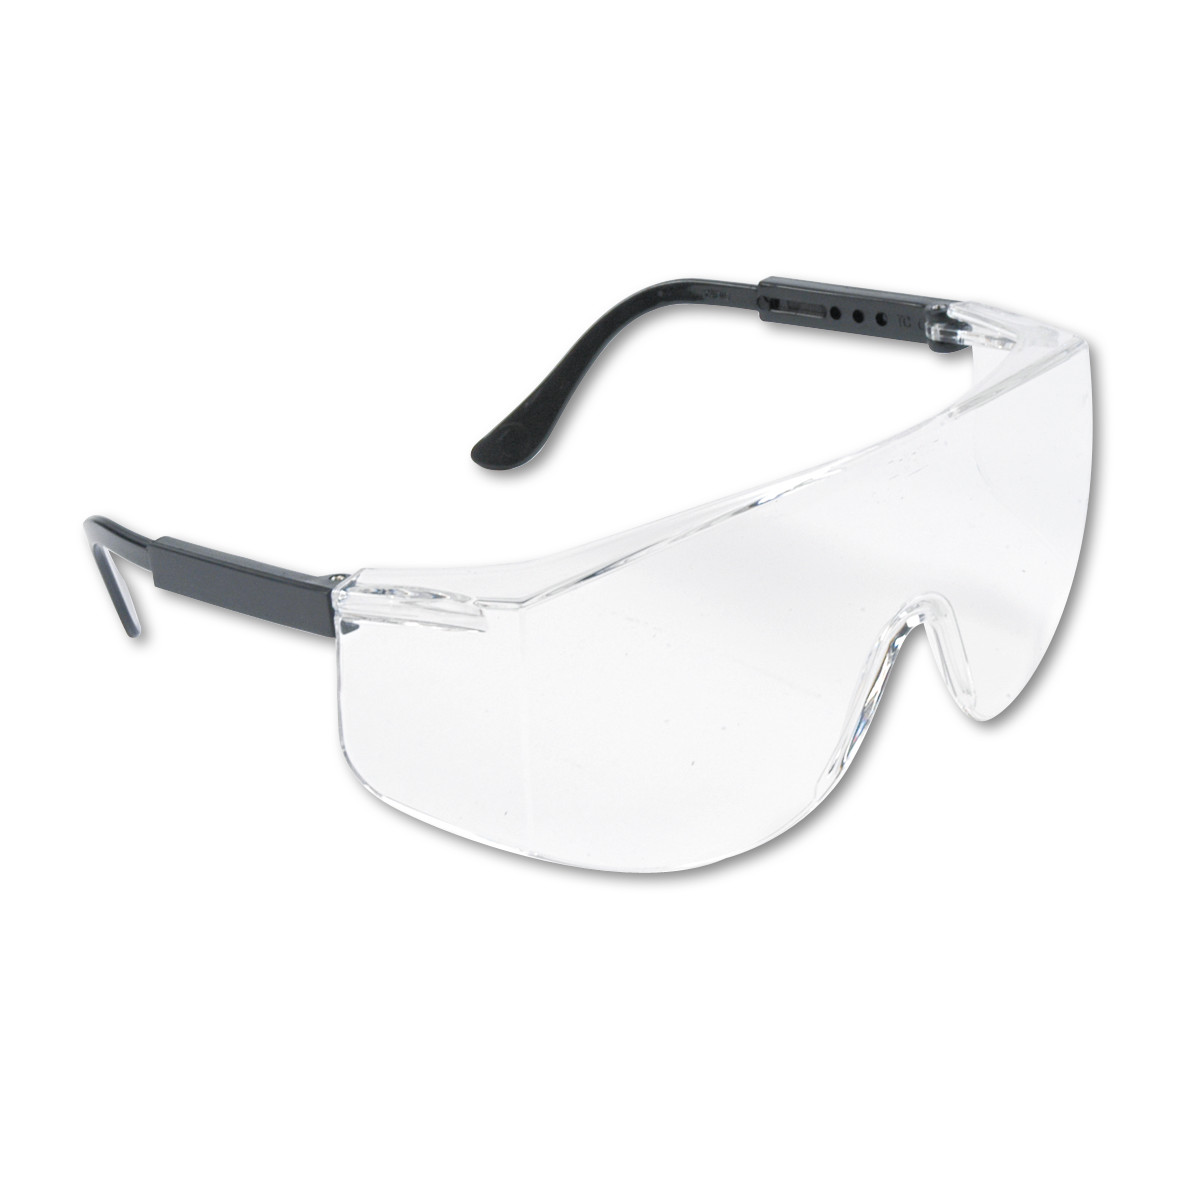 Tacoma Lightweight Safety Glasses Wrap-Around TC110 - image 1 of 2